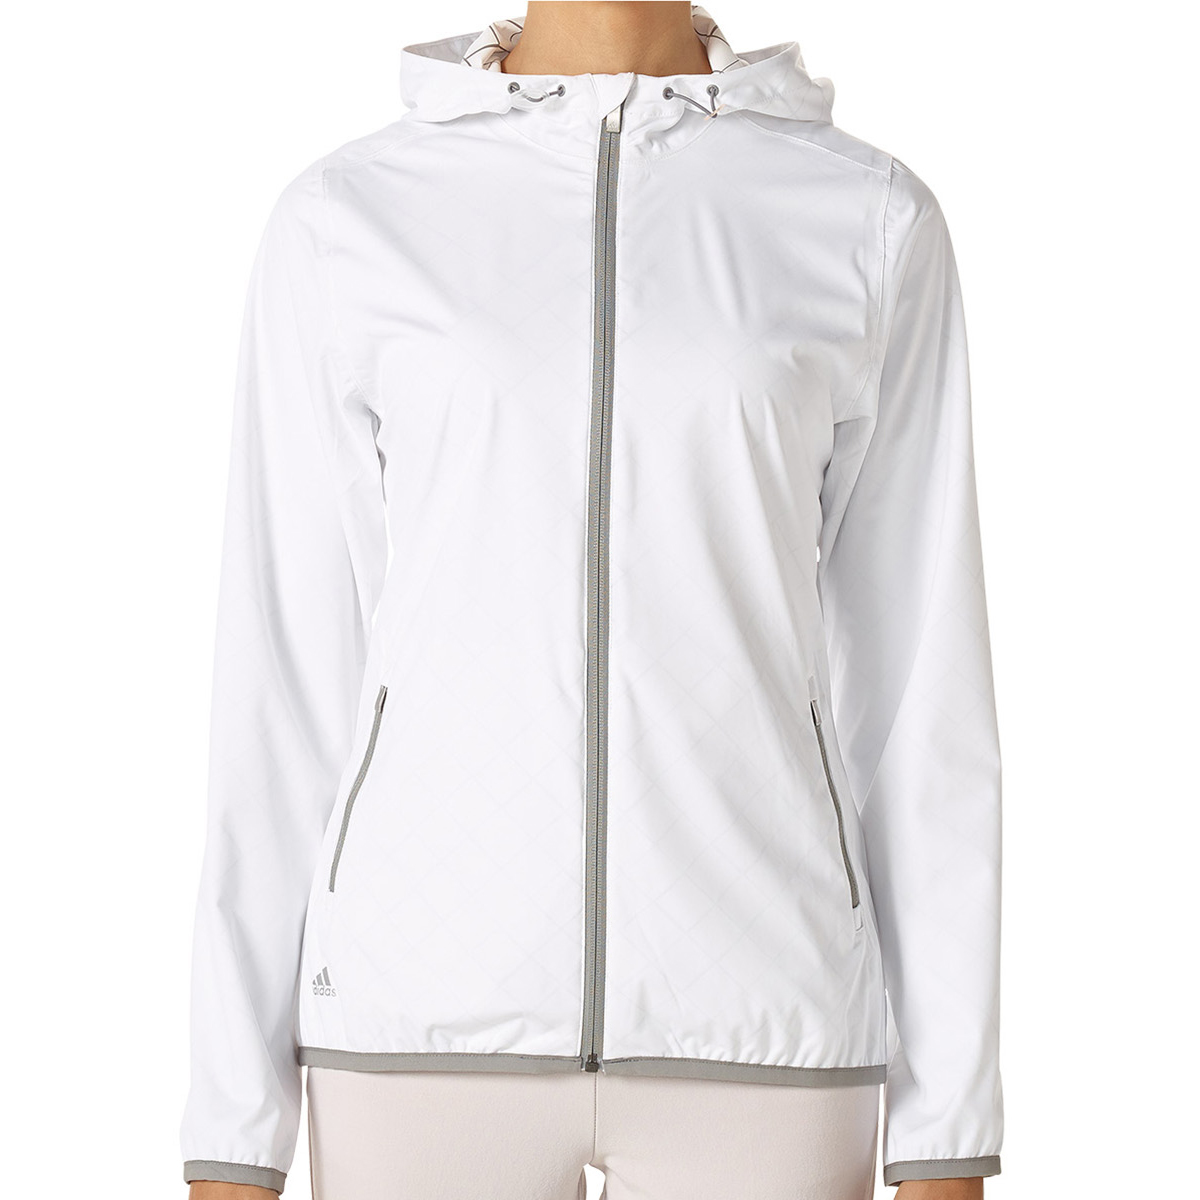 Adidas Ladies Climastorm Waterproof Hooded Golf Jacket Shop Clothing Shoes Online